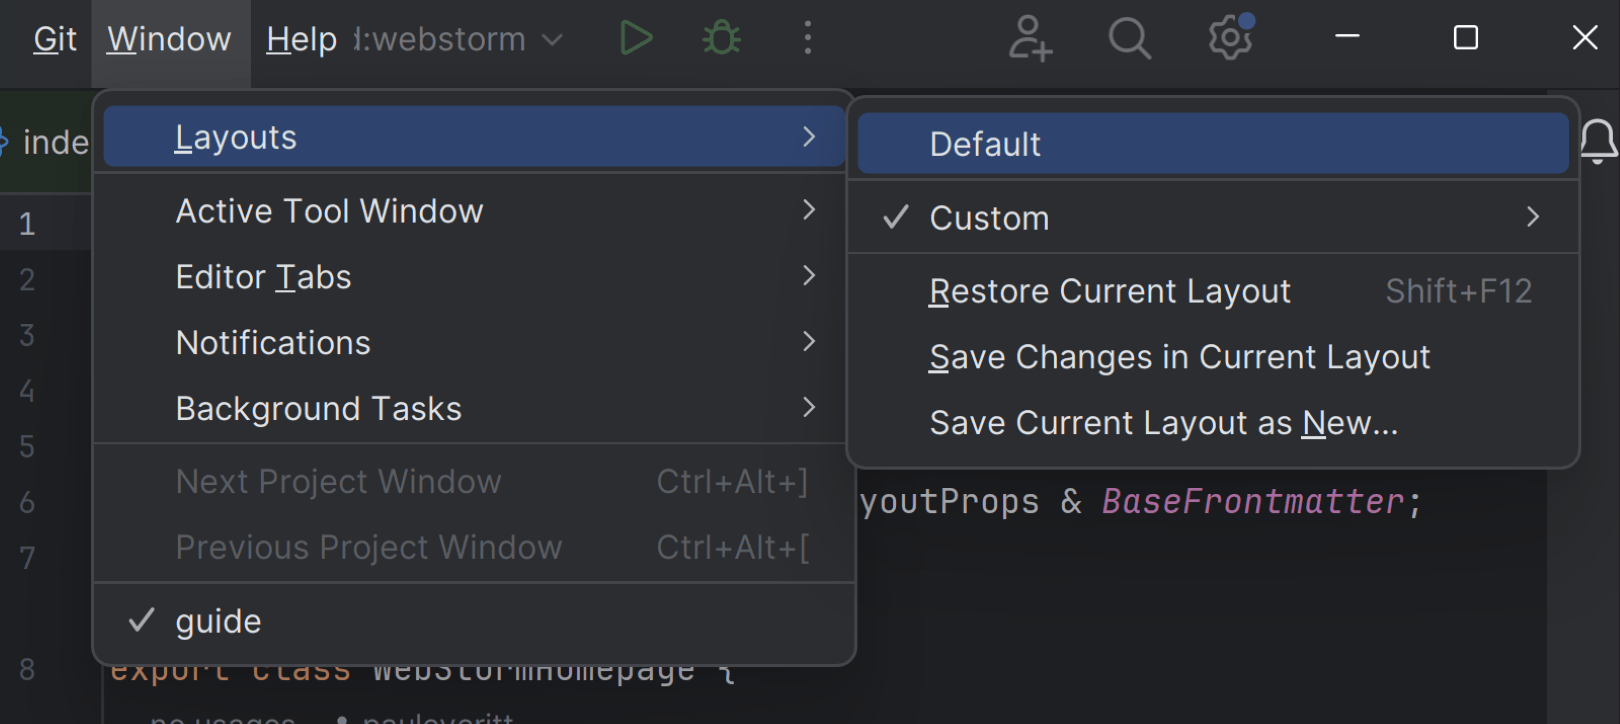 Default tool window layout option